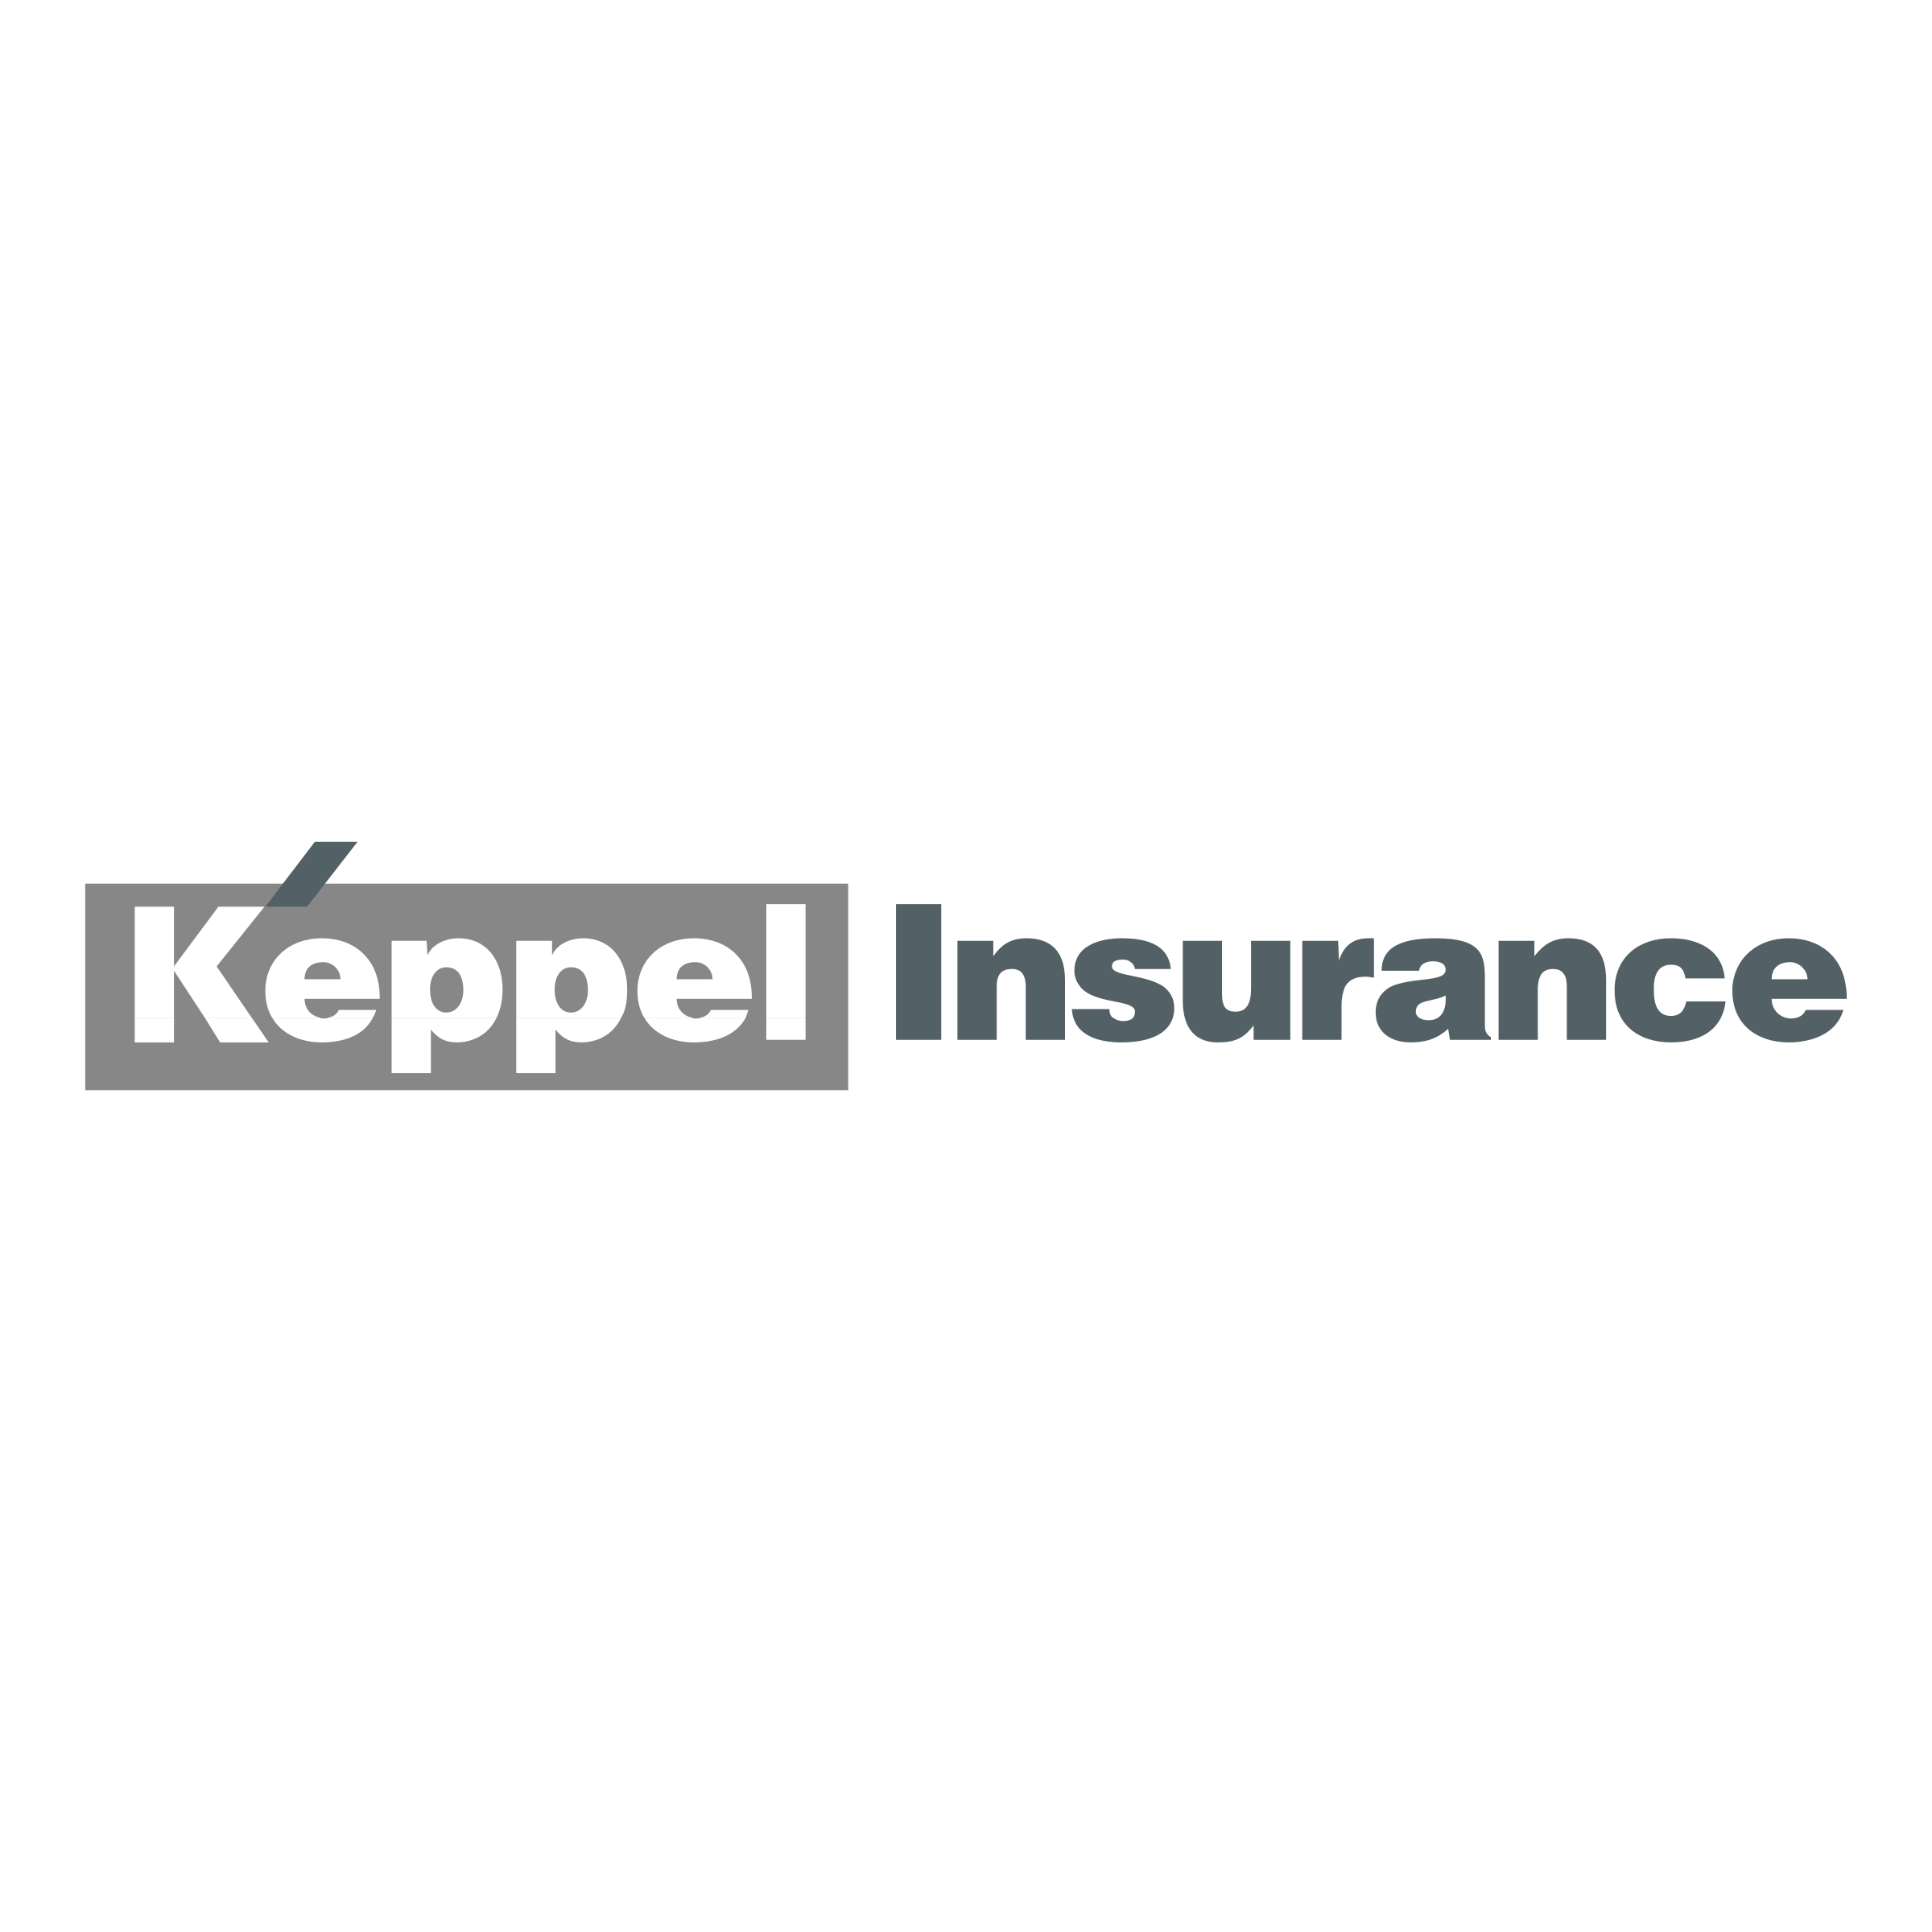 Keppel Logo - Keppel Insurance Logo PNG Transparent & SVG Vector - Freebie Supply